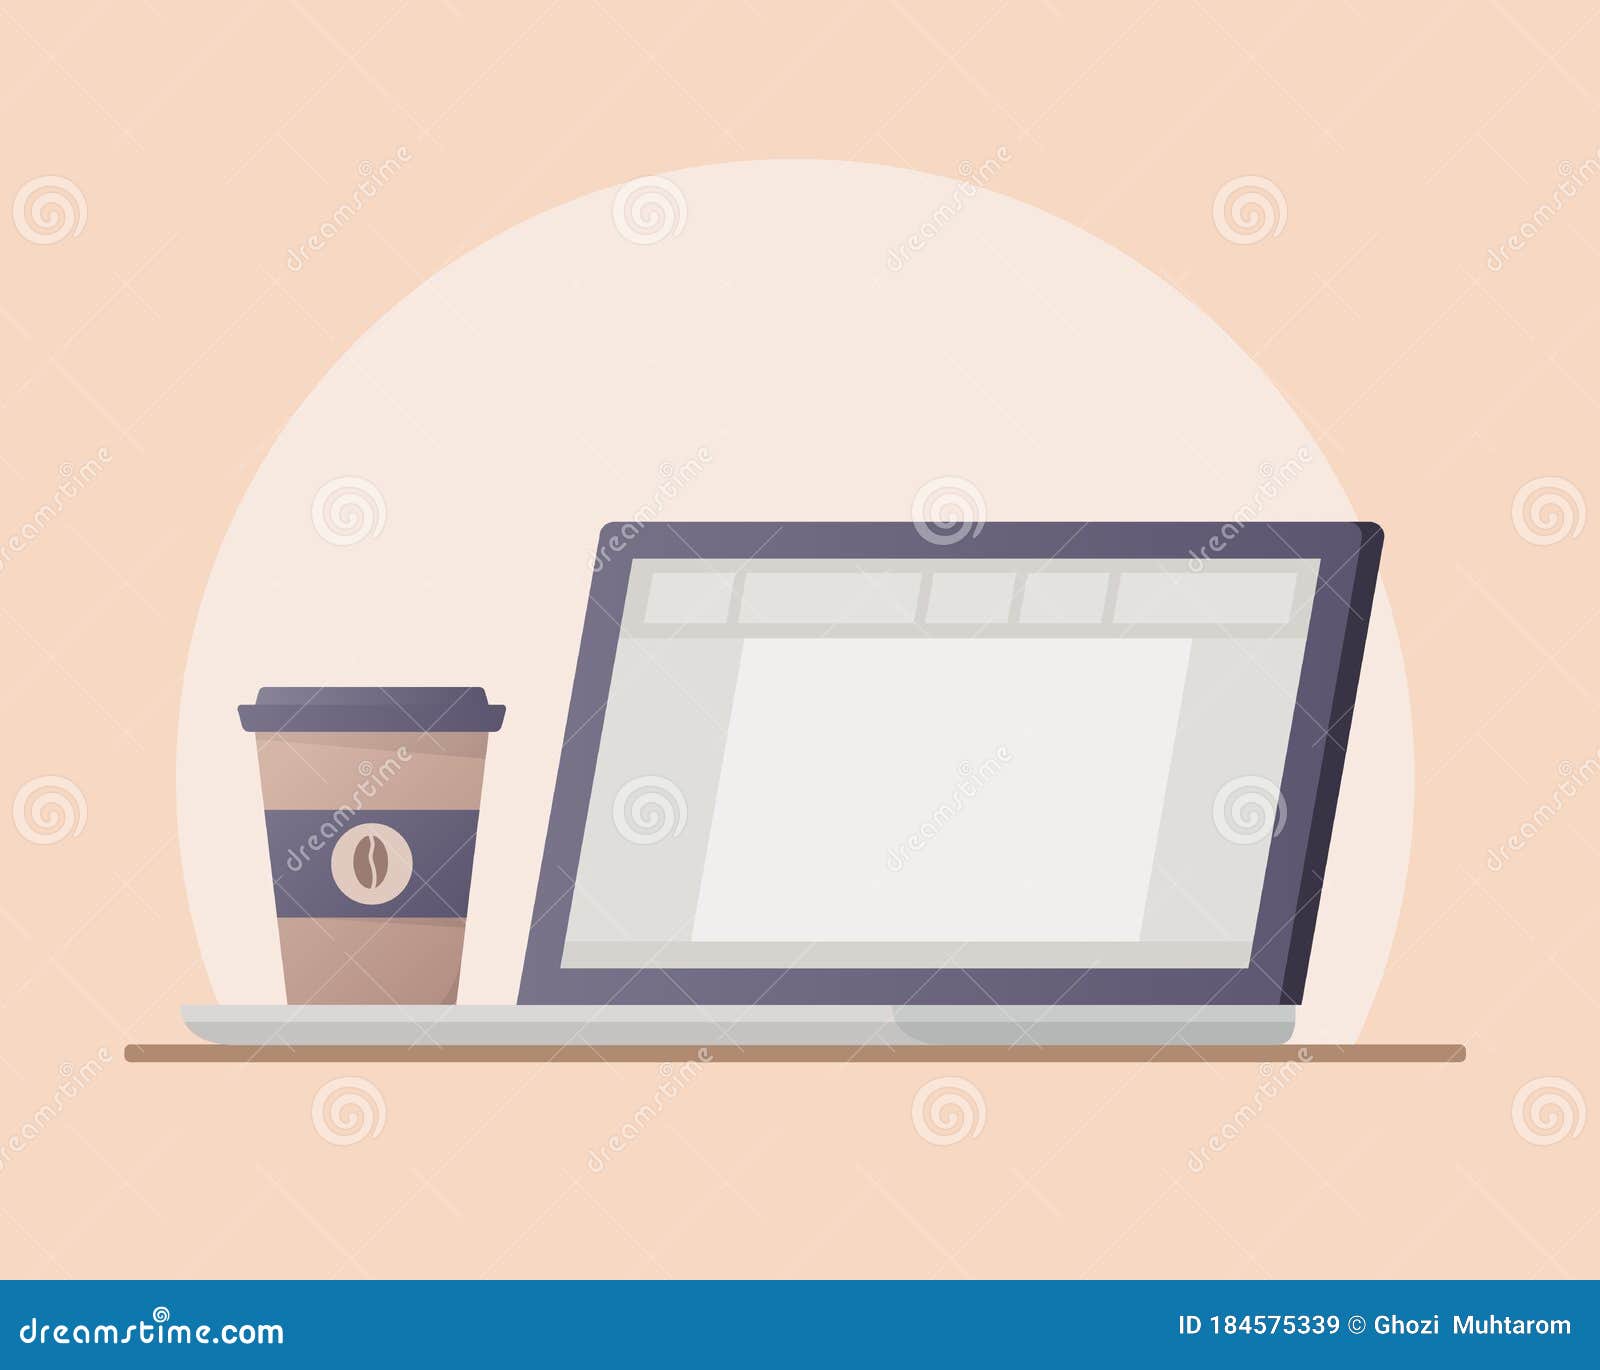 laptop coffee good for meeting break businessman cafe internet cafe